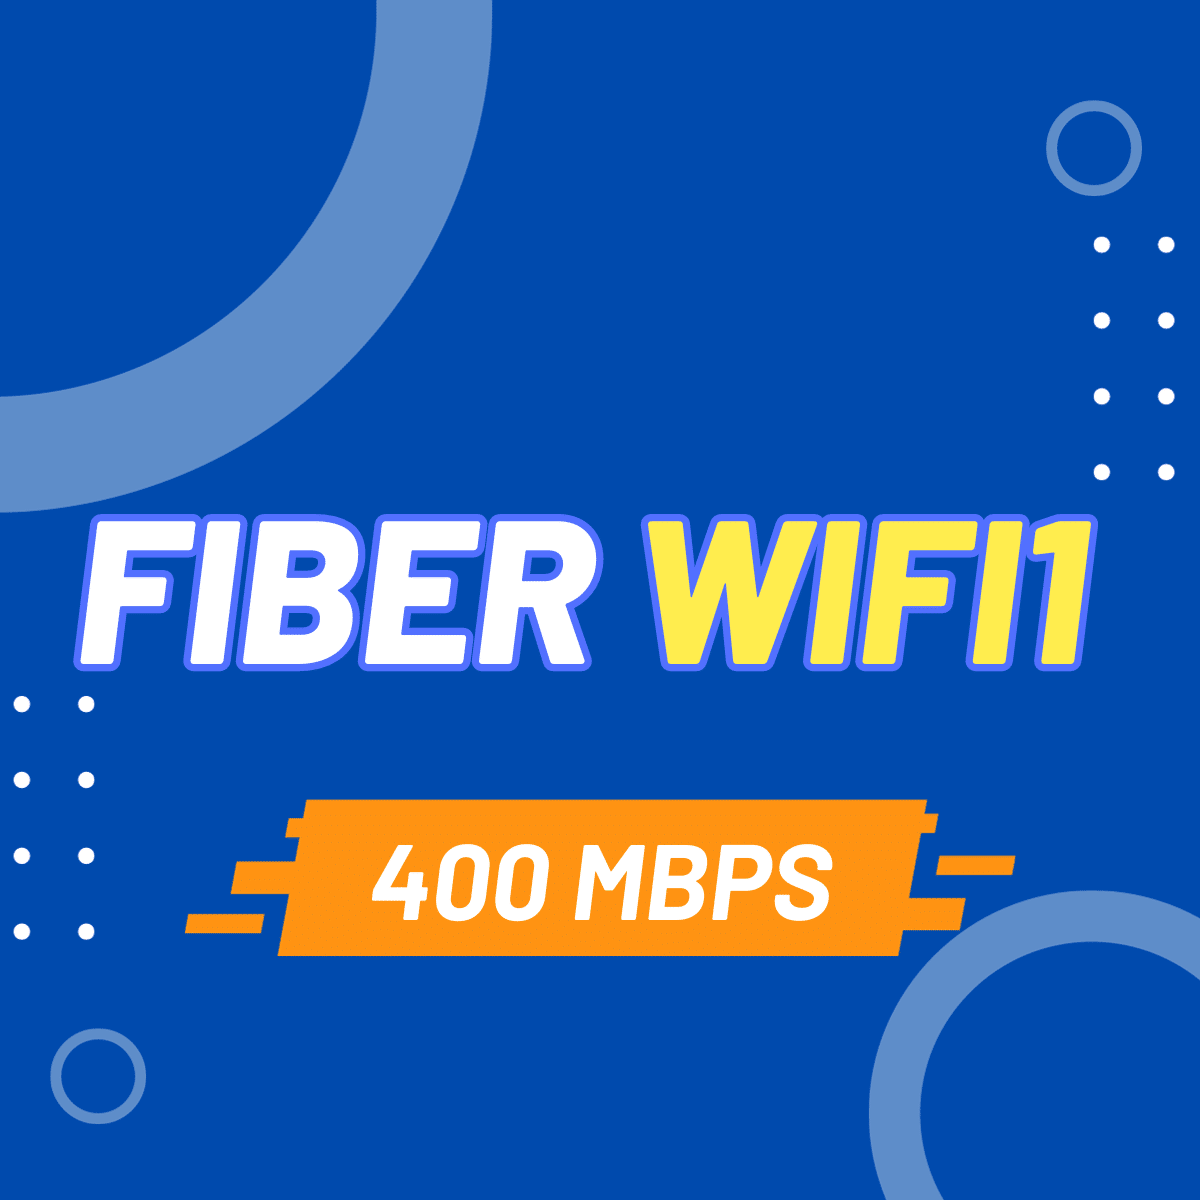 Fiber Wifi1, fiberwifi1